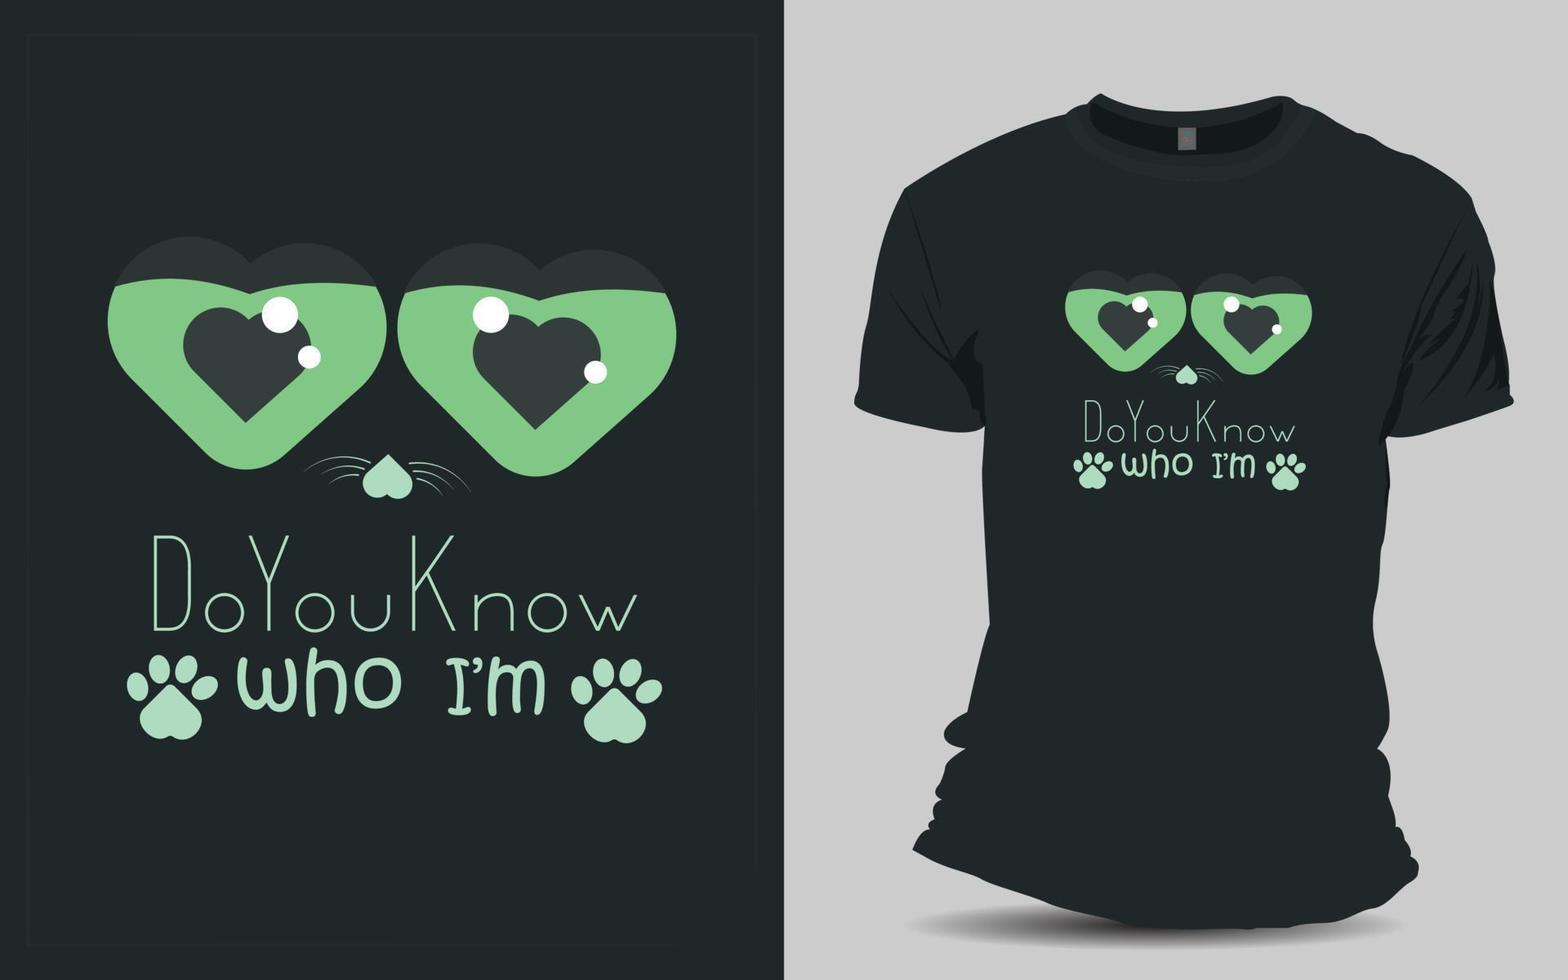 Lovely Cat t-shirt design for your Pet vector